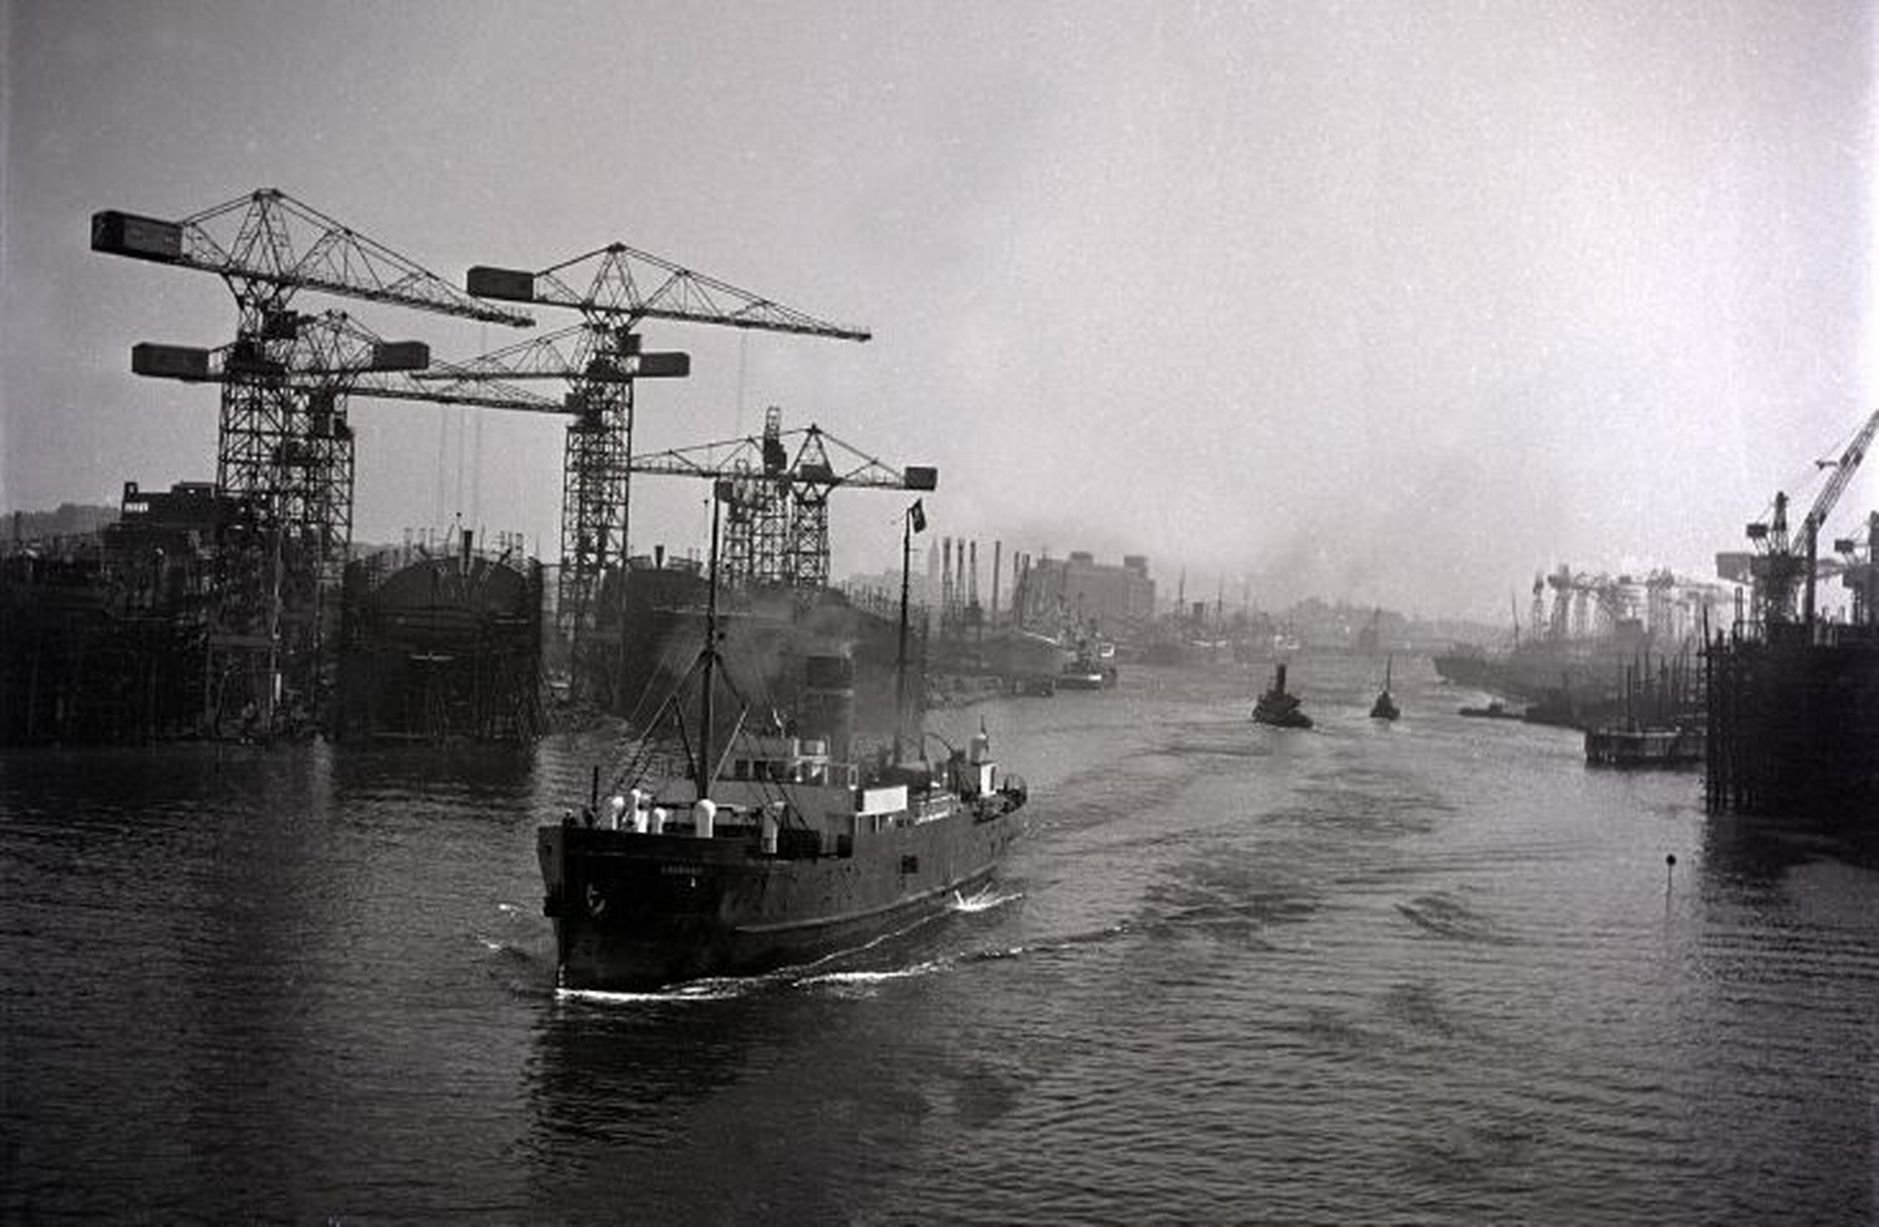 River-Clyde-shipbuilding-industry-in-Glasgow.jpg